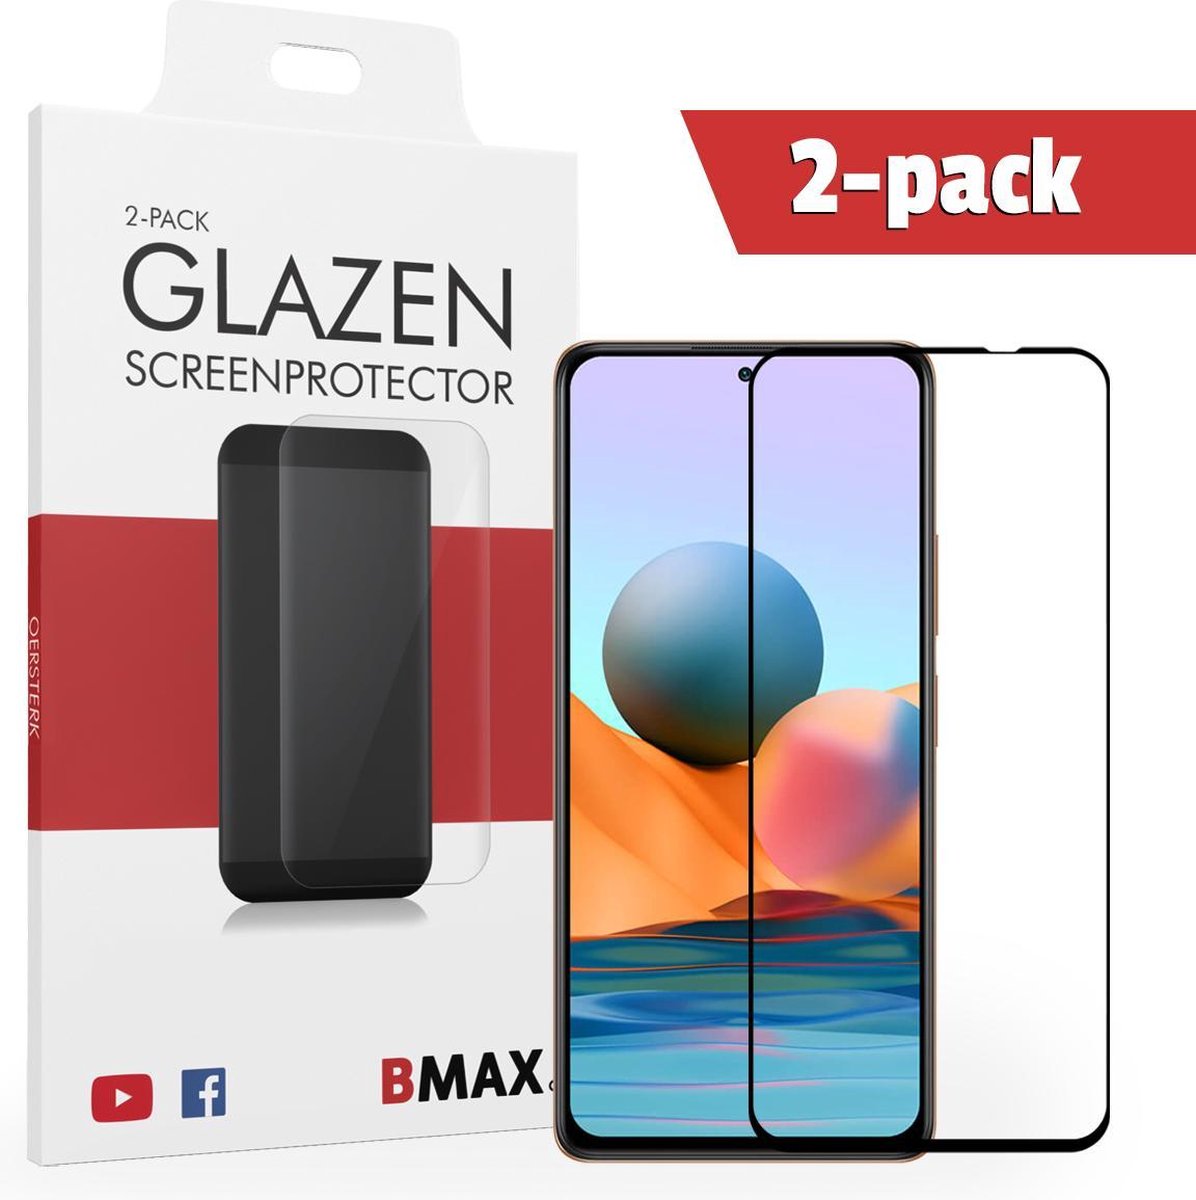 2-pack Bmax Xiaomi Redmi Note 10 Pro Screenprotector - Glass - Full Cover 2.5d - Black